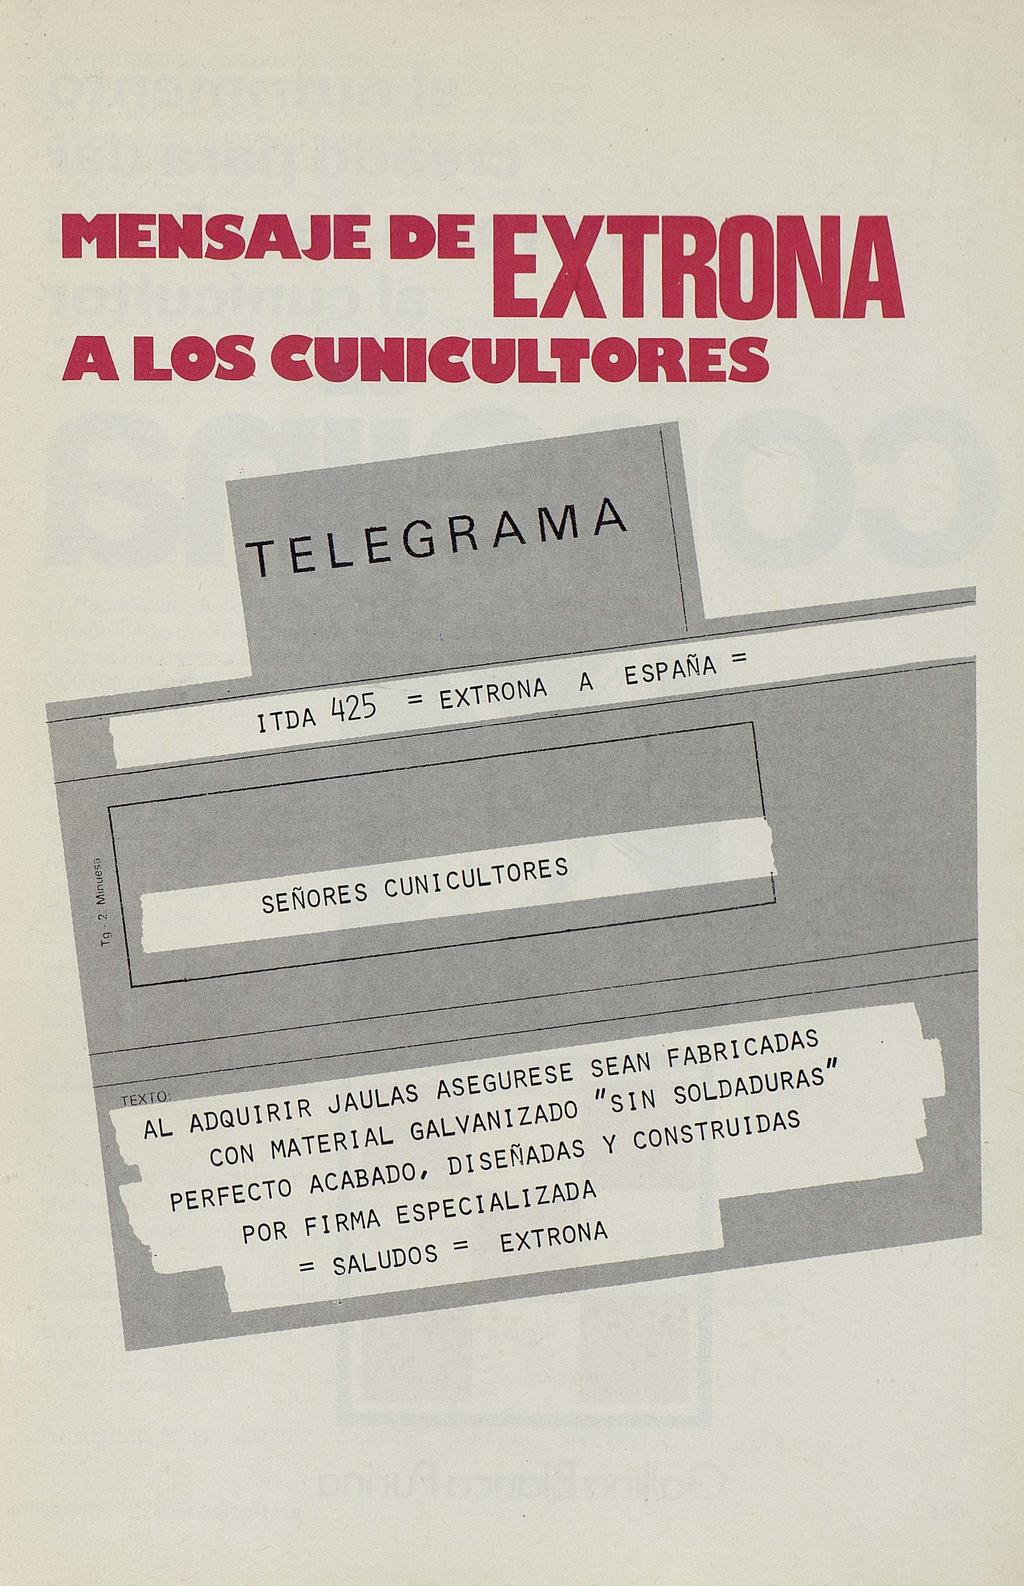 "EIISAIE DE EXTRONA A los CUII'CUlI'OIlES TELEGRAMA ITDA 425. A ESPAÑA = = EXTRONA SEÑORES CUNICUL: _T,_:OR~E_S =~] -.